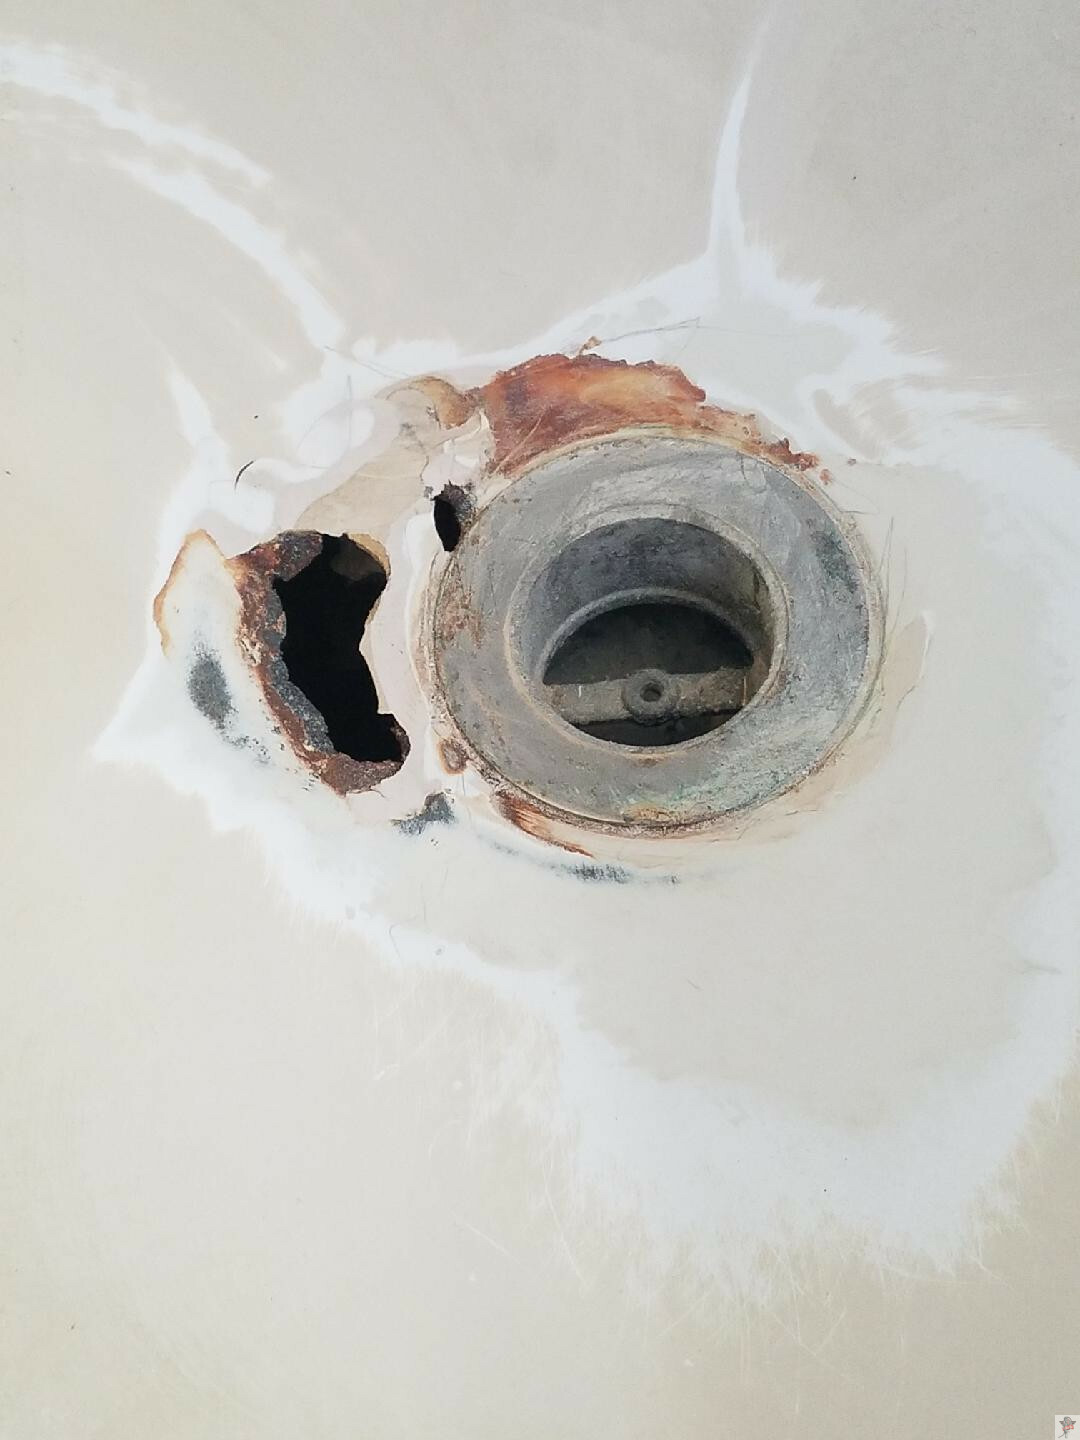 Tub Refinishing Repair Rust More, How To Repair Rust Around Bathtub Drain